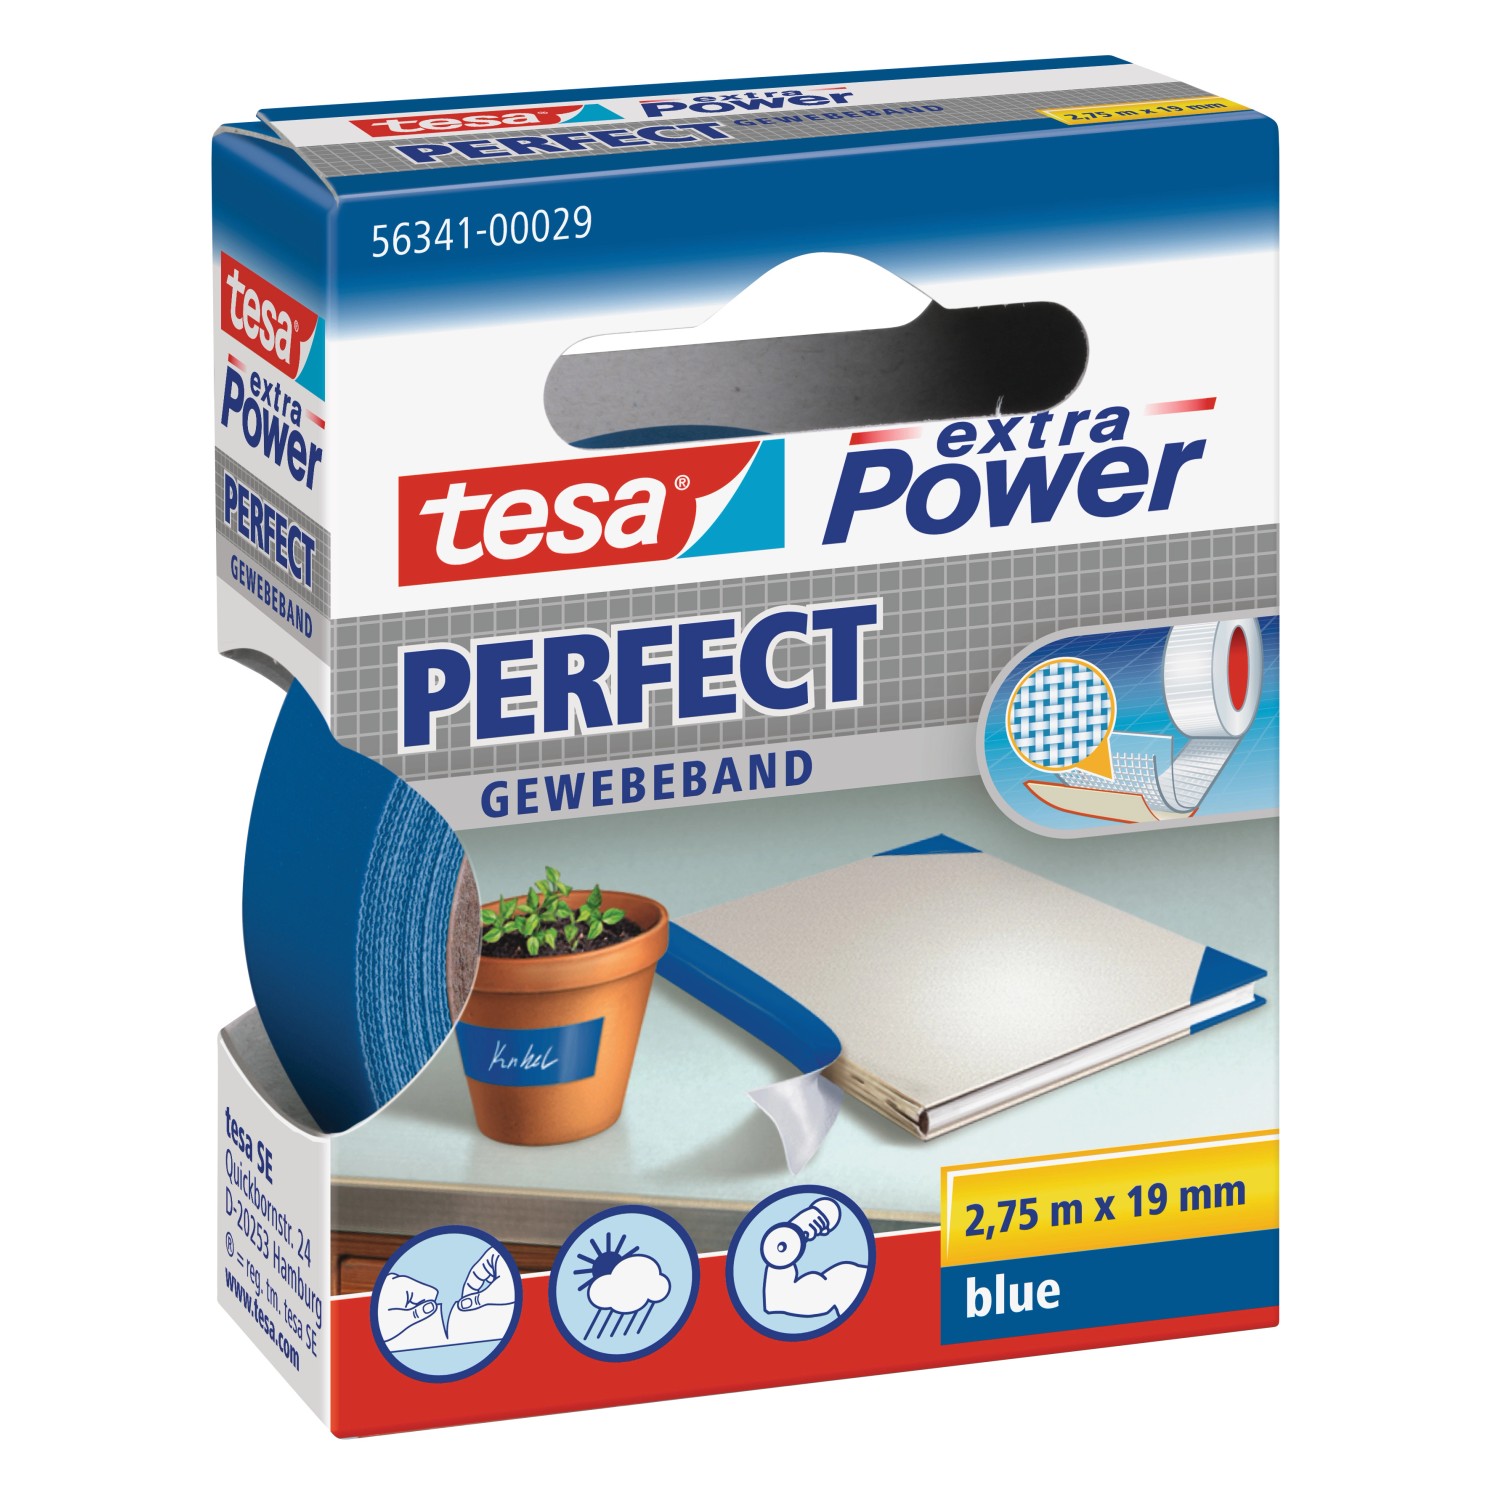 Tesa Extra Power Perfect Gewebeband Blau 2,75 m x 19 mm